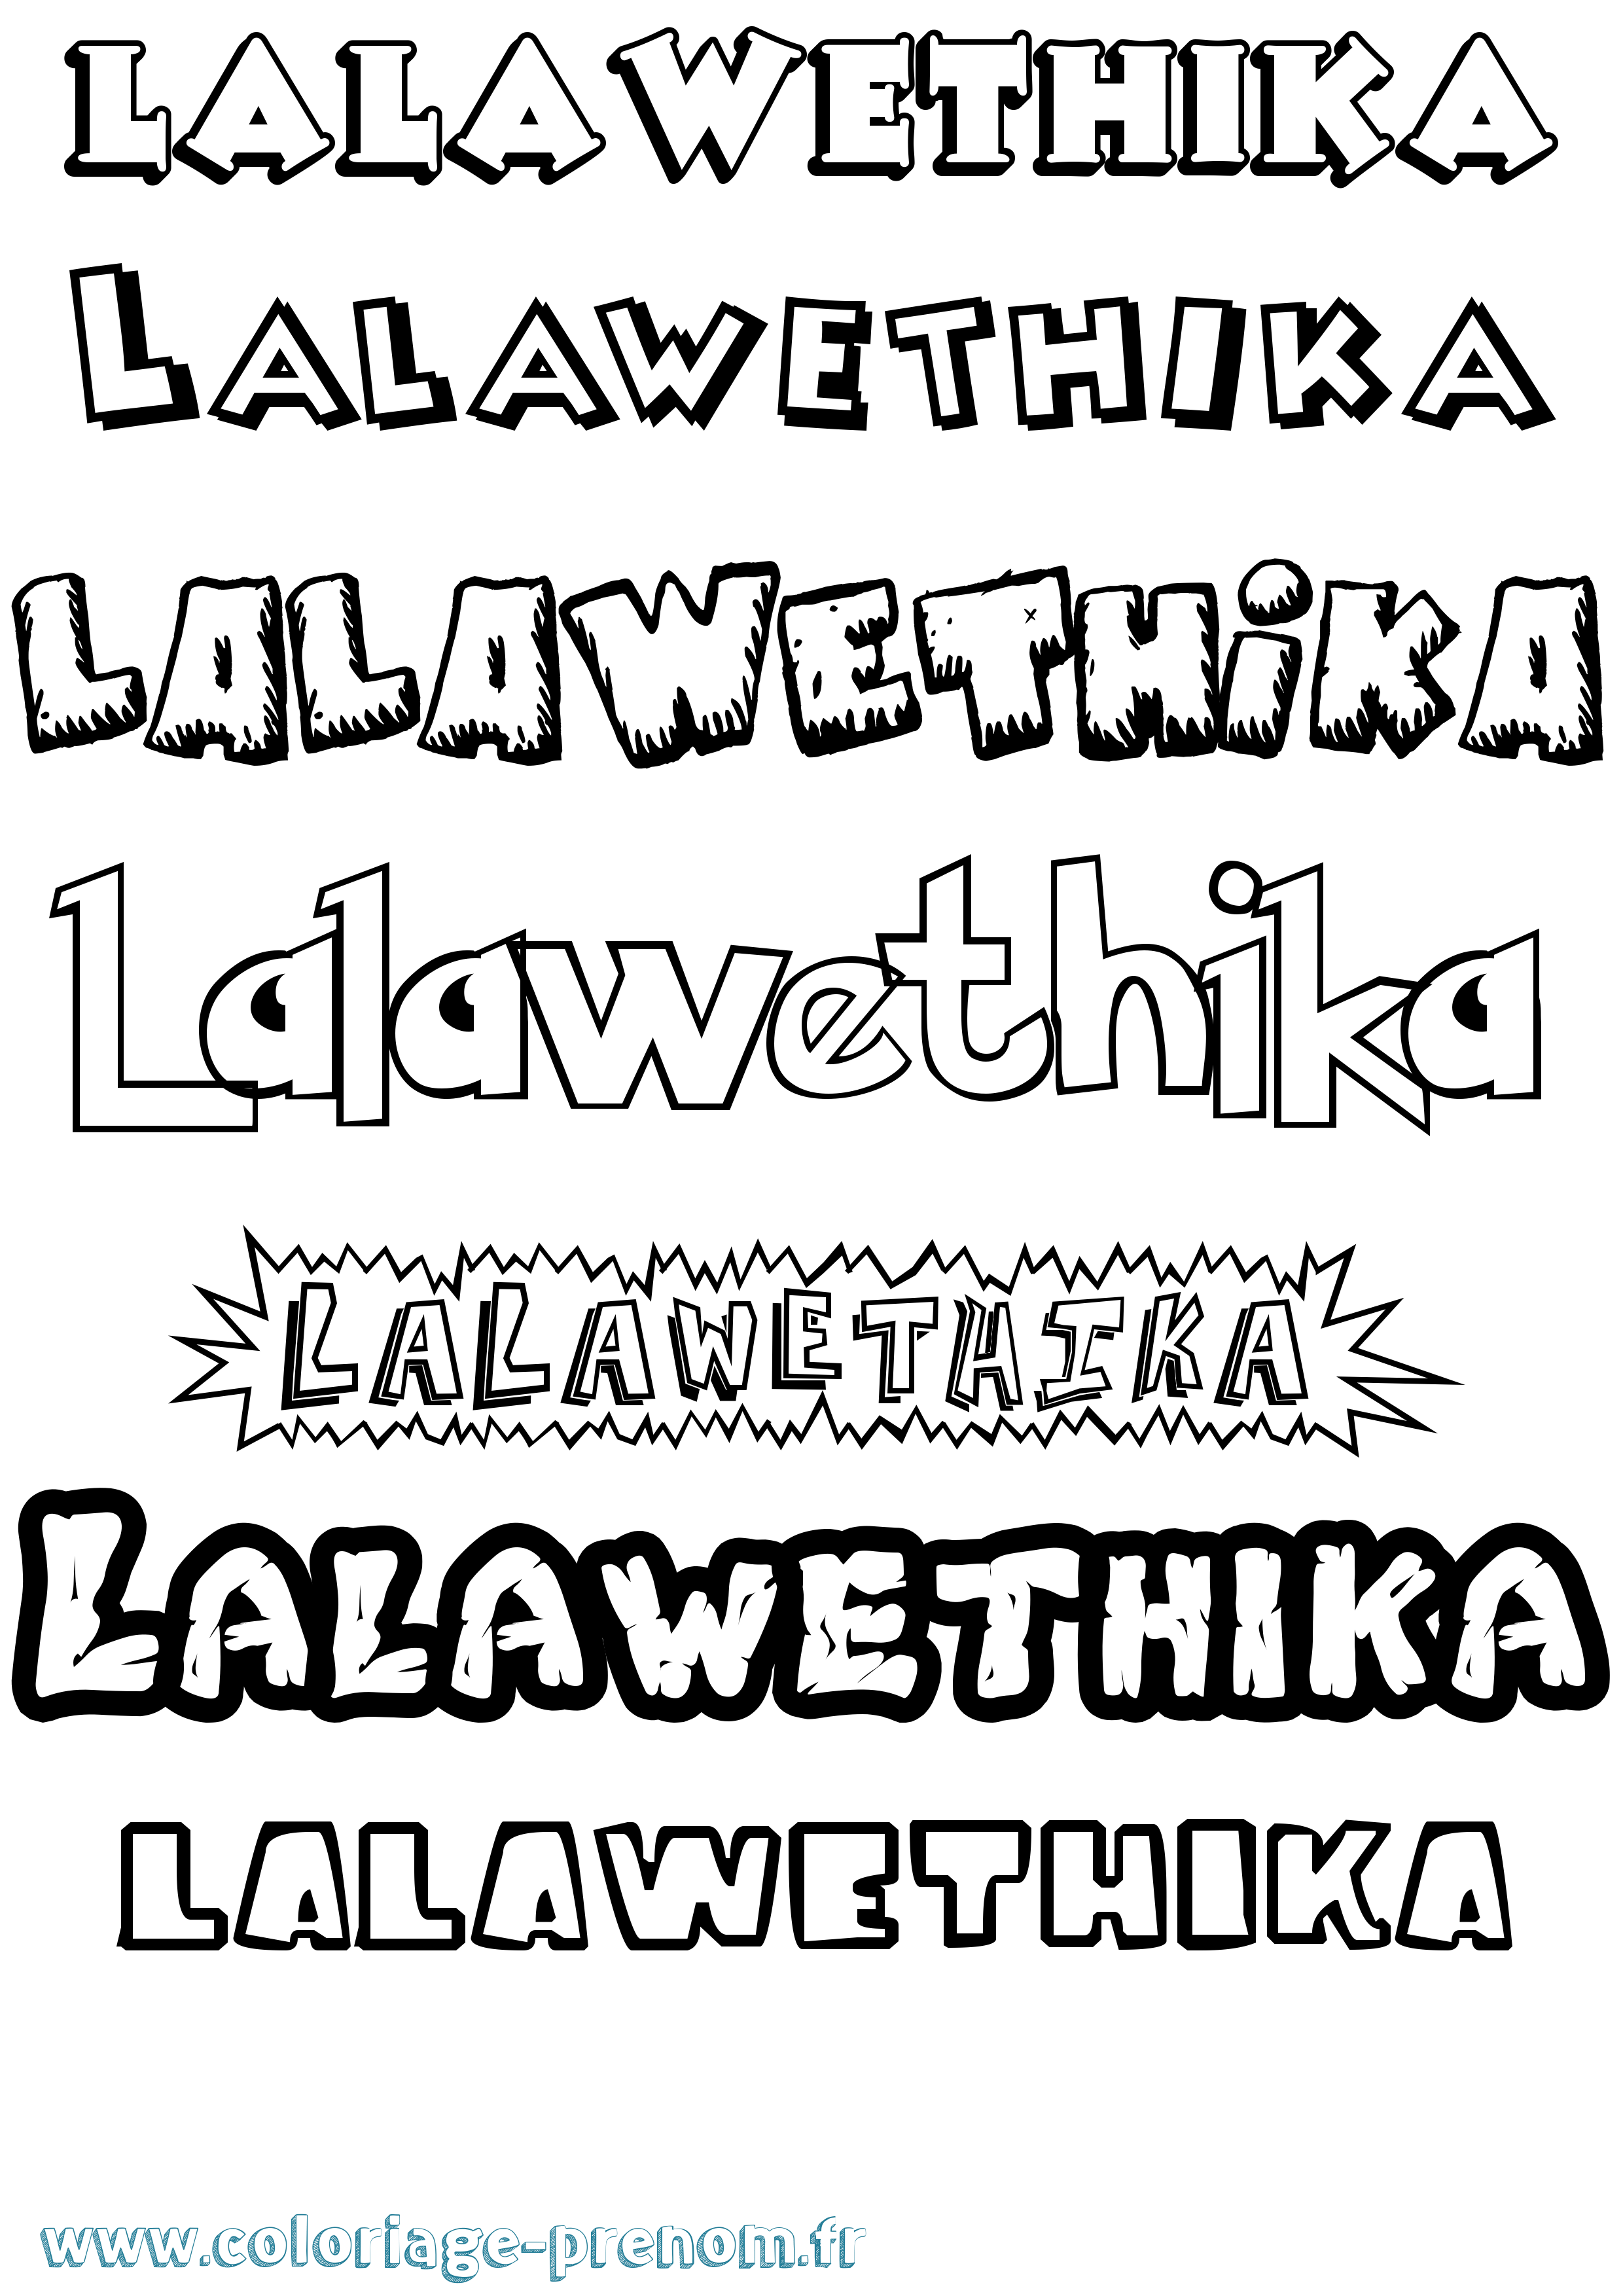 Coloriage prénom Lalawethika Dessin Animé